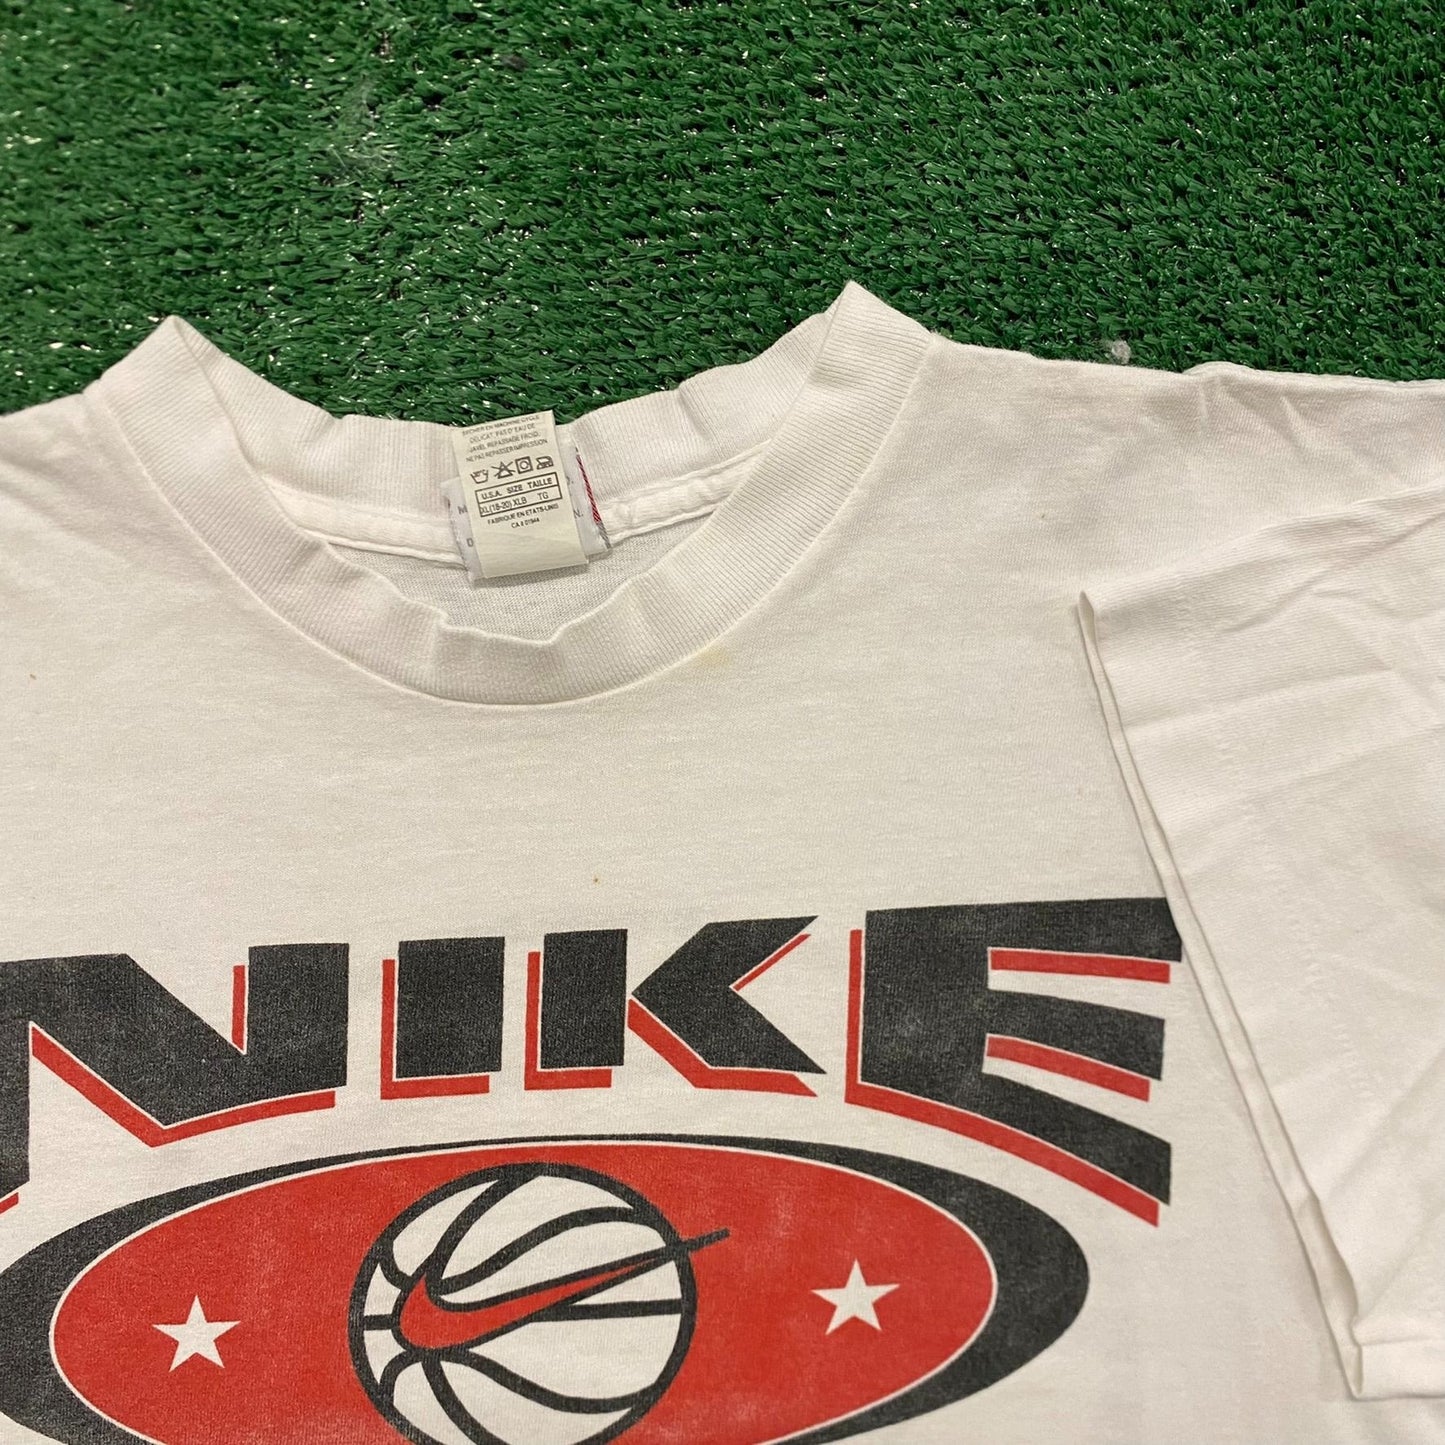 Vintage 90s Nike Camp Center Swoosh Single Stitch T-Shirt